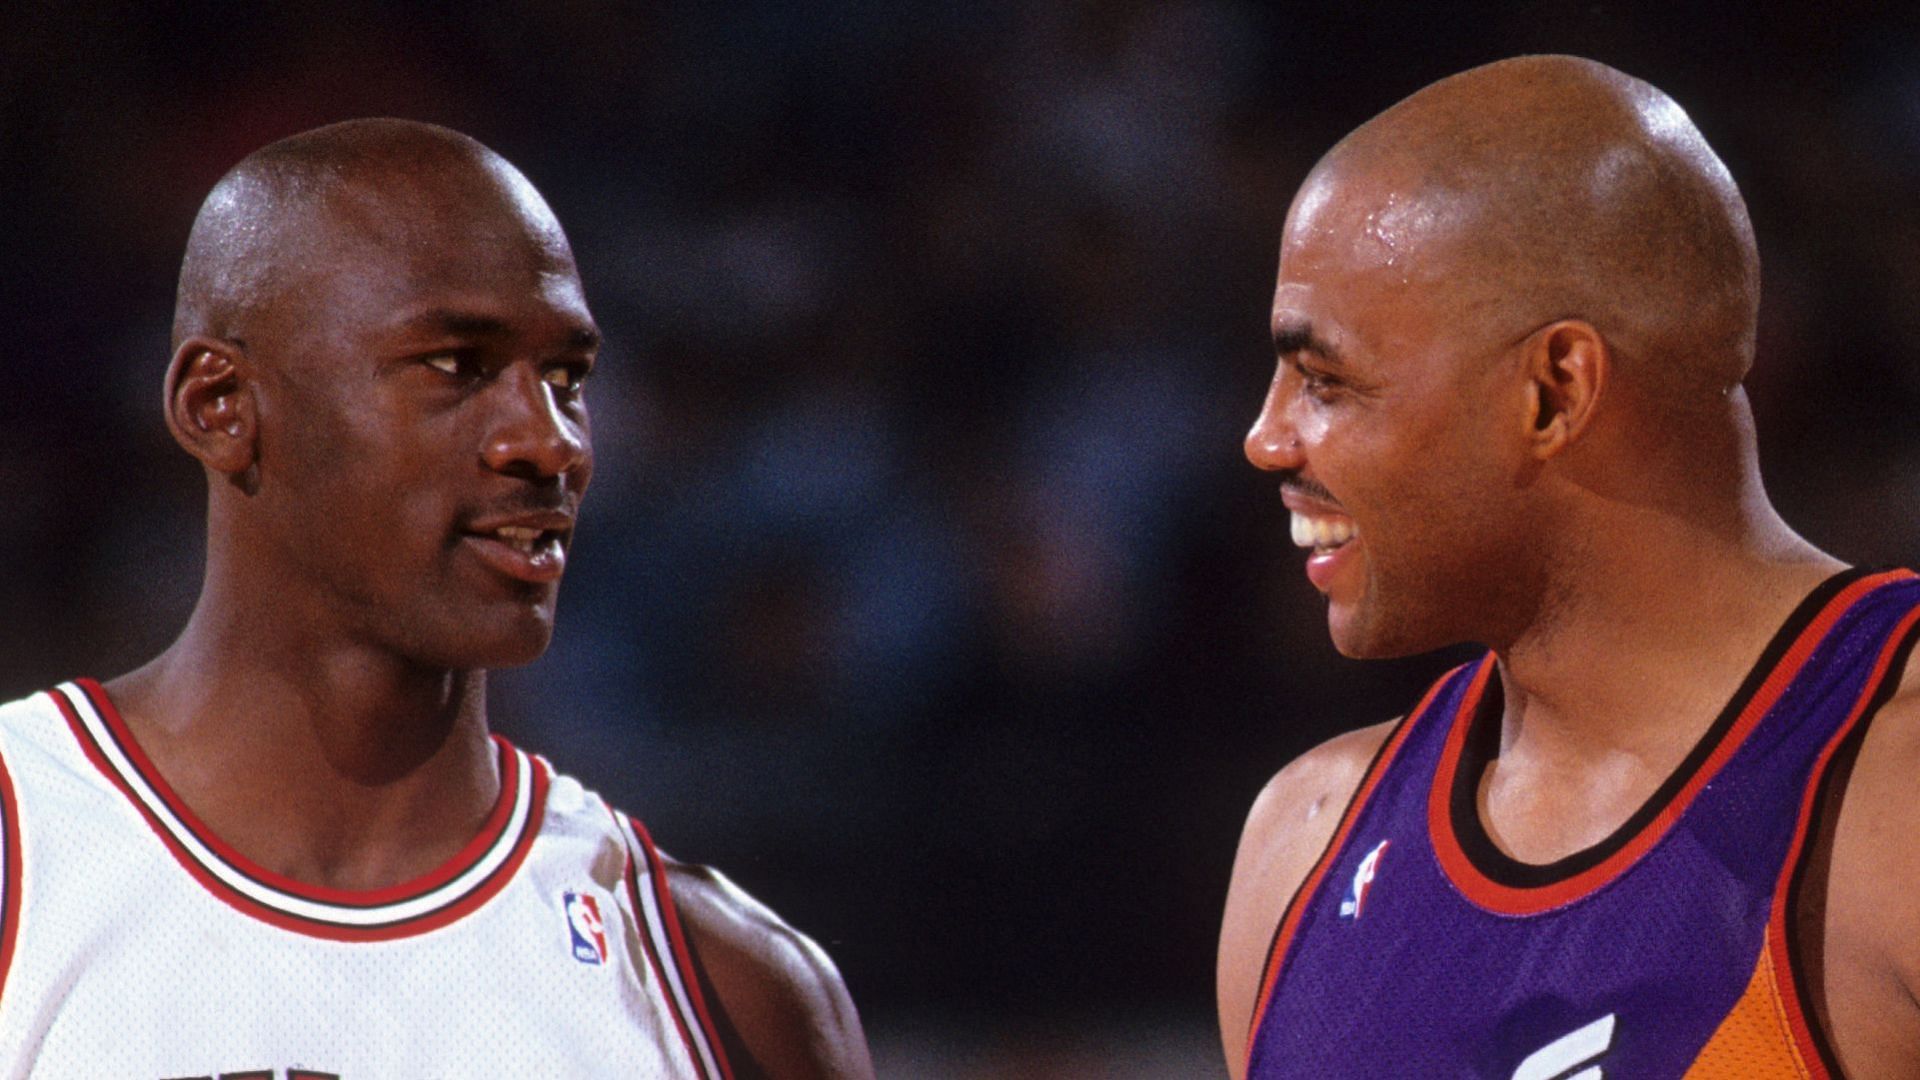 NBA legends Michael Jordan and Charles Barkley